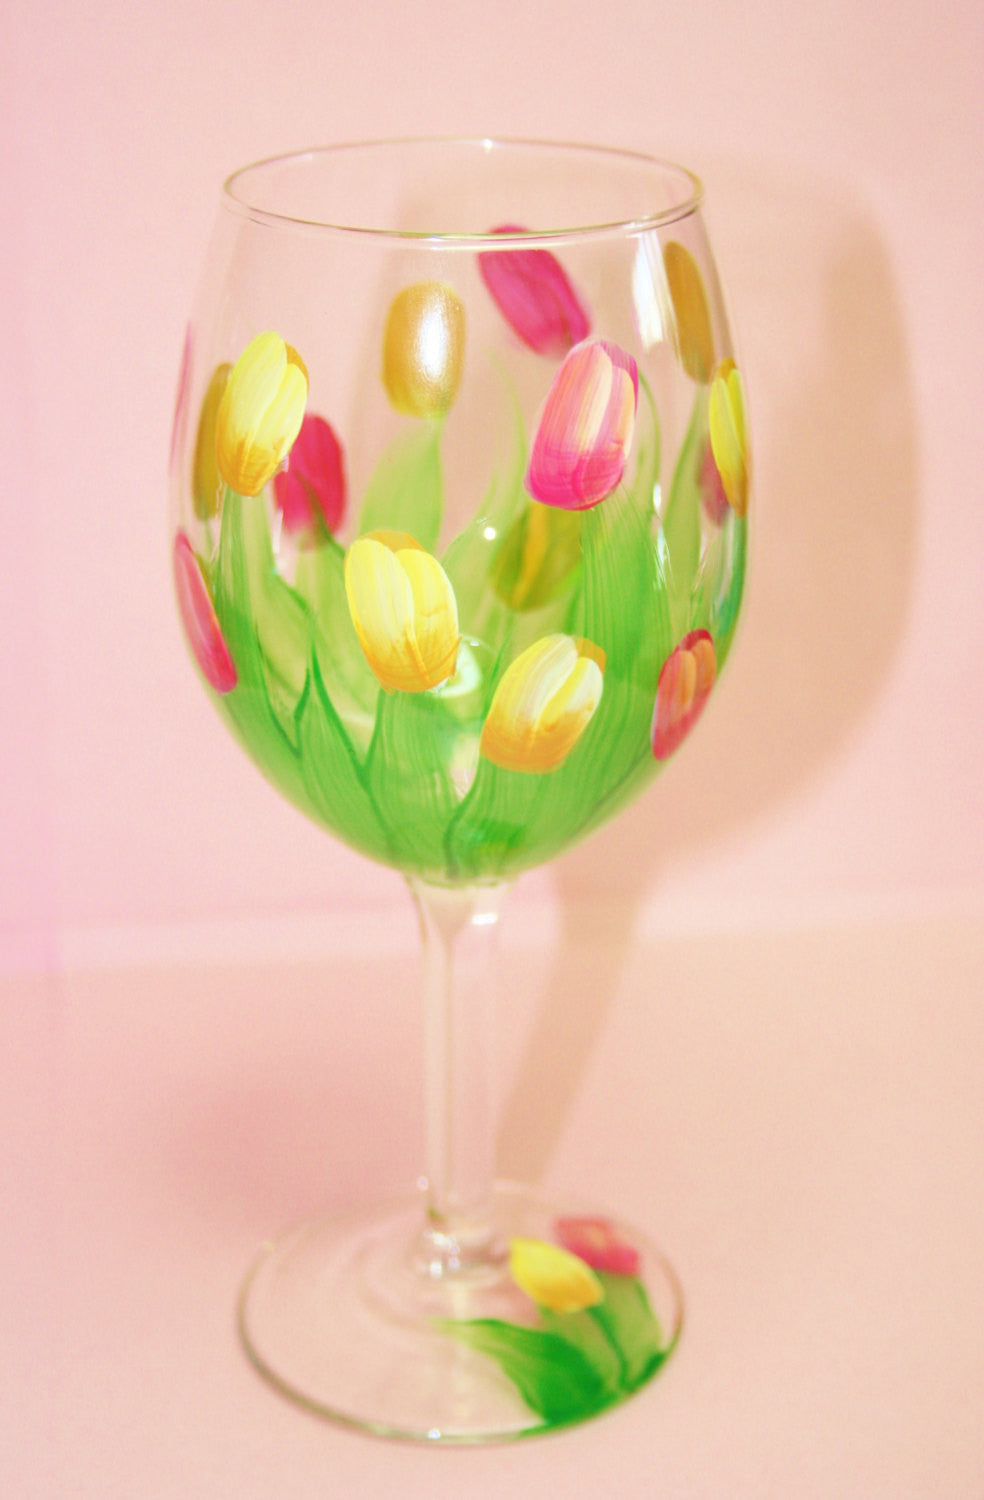  Tulips Flowers Hand Painted Wine Glasses Set of 2